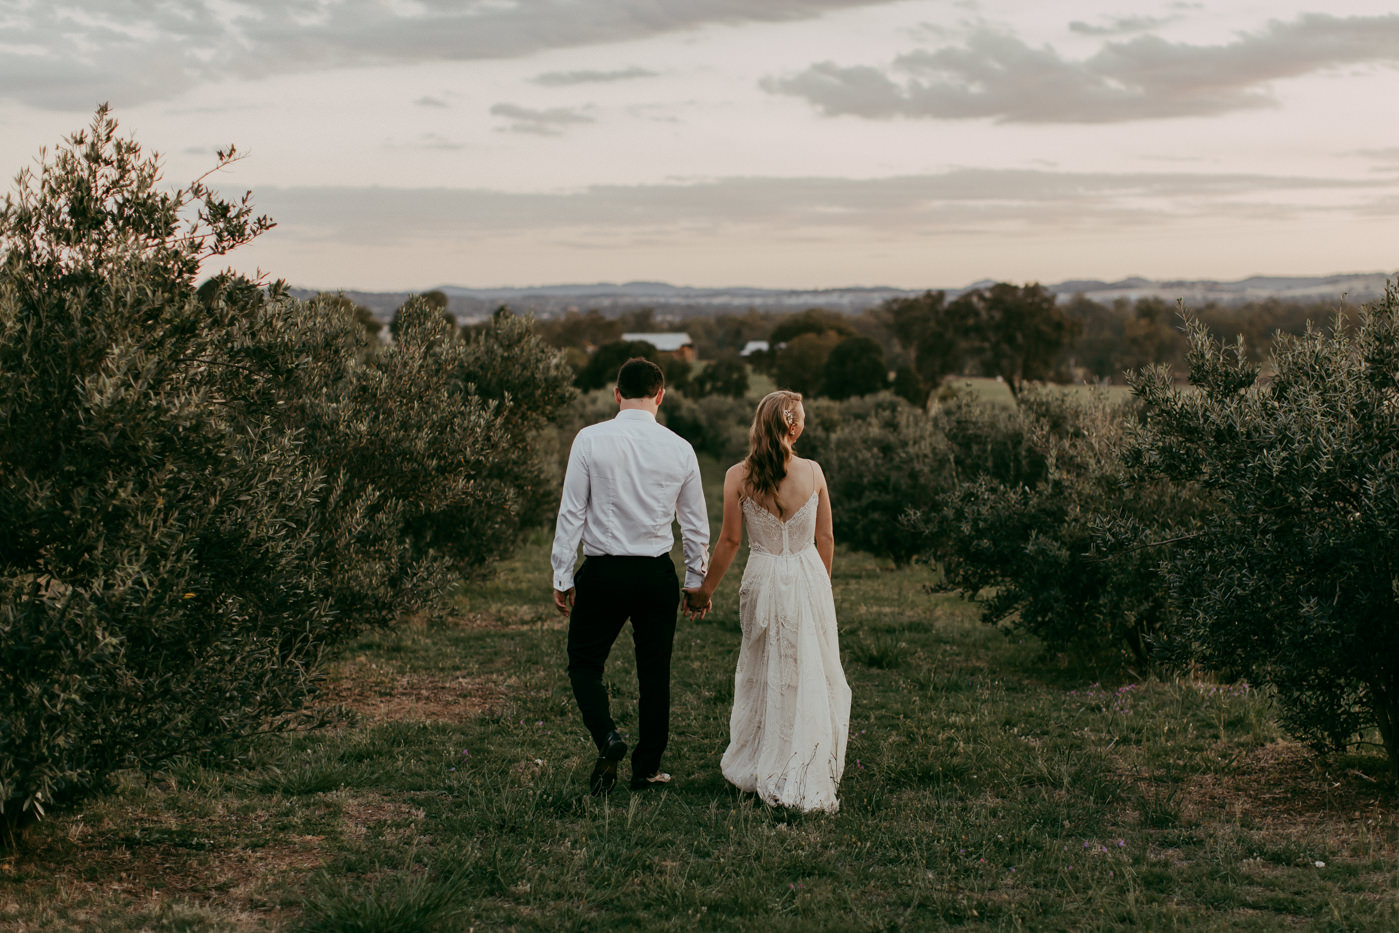 Anthony & Eliet - Wagga Wagga Wedding - Country NSW - Samantha Heather Photography-162.jpg